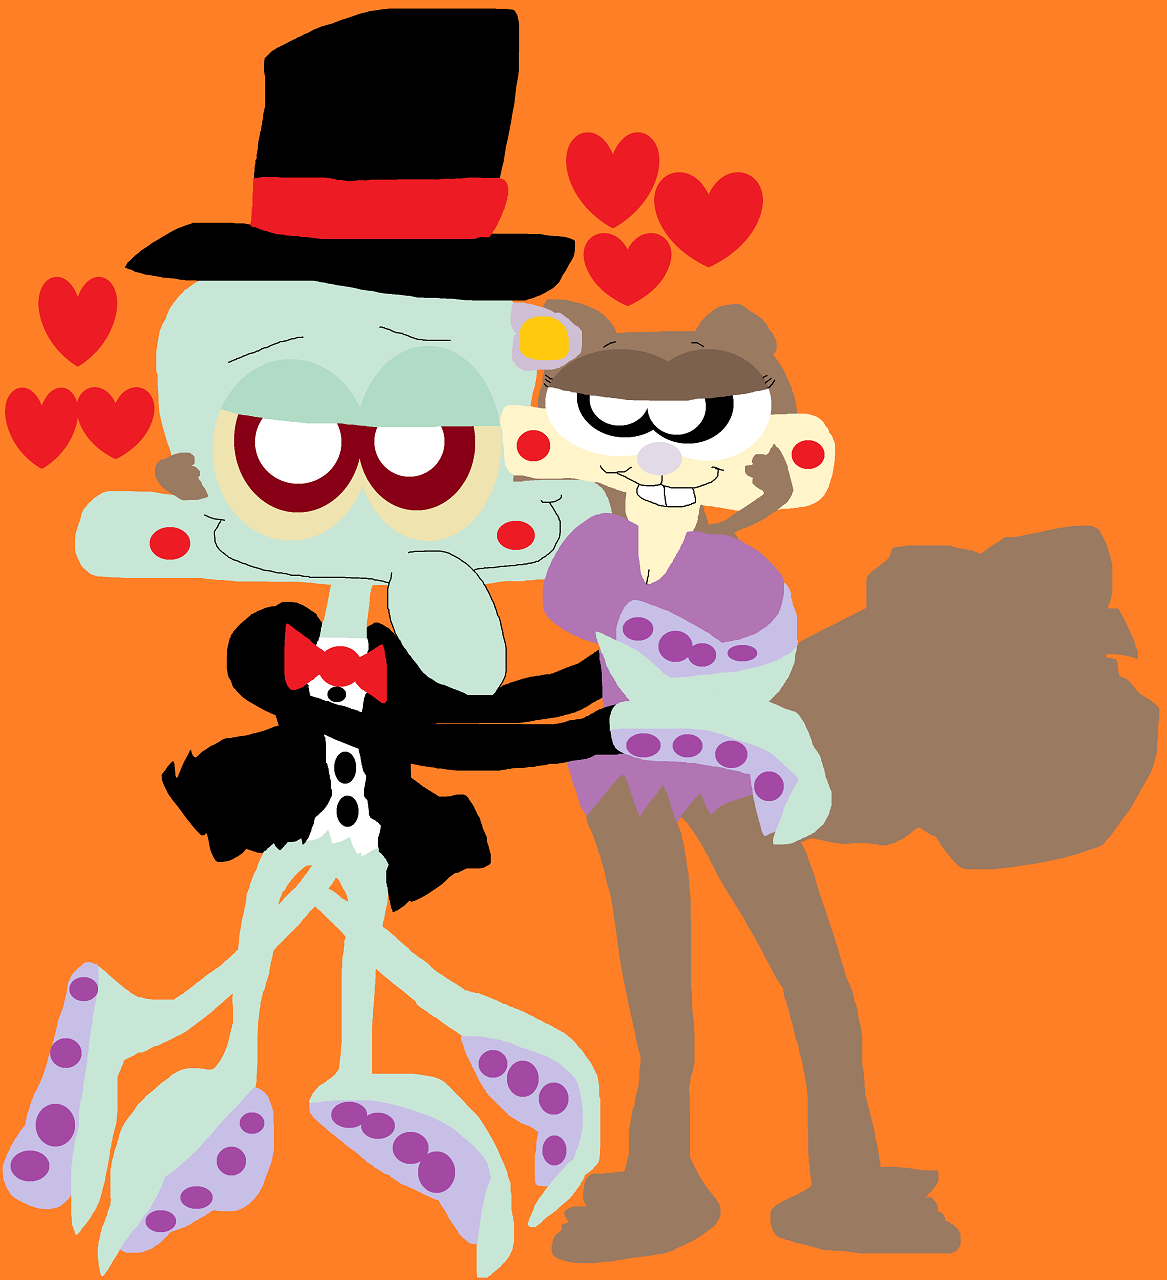 Squidward And Sandy Dancing On A Fancy Date by Falconlobo